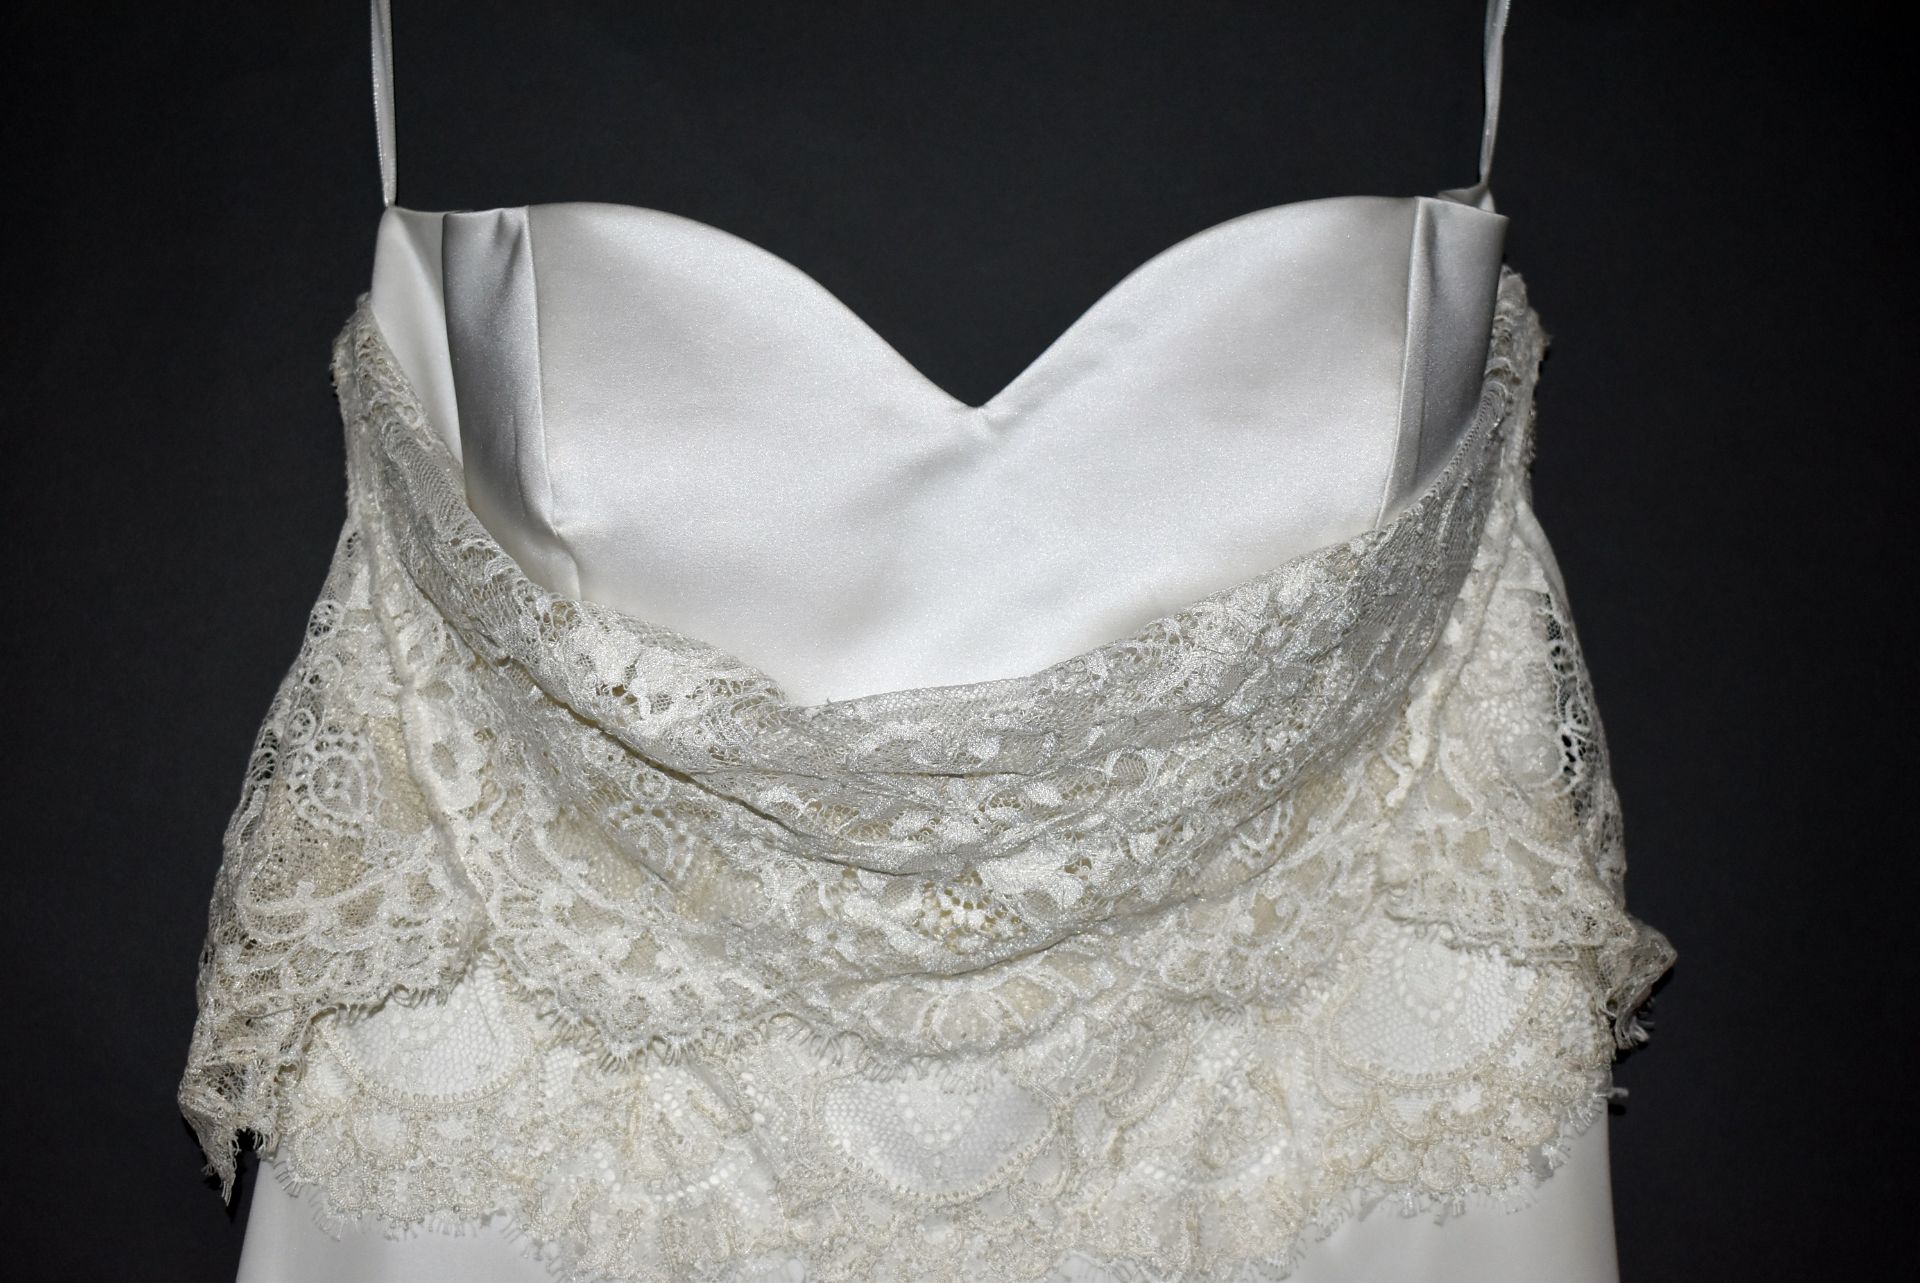 1 x LUSAN MANDONGUS Off The Shoulder Lace Bodice Designer Wedding Dress Bridal Gown RRP £1,450 UK 14 - Image 6 of 6